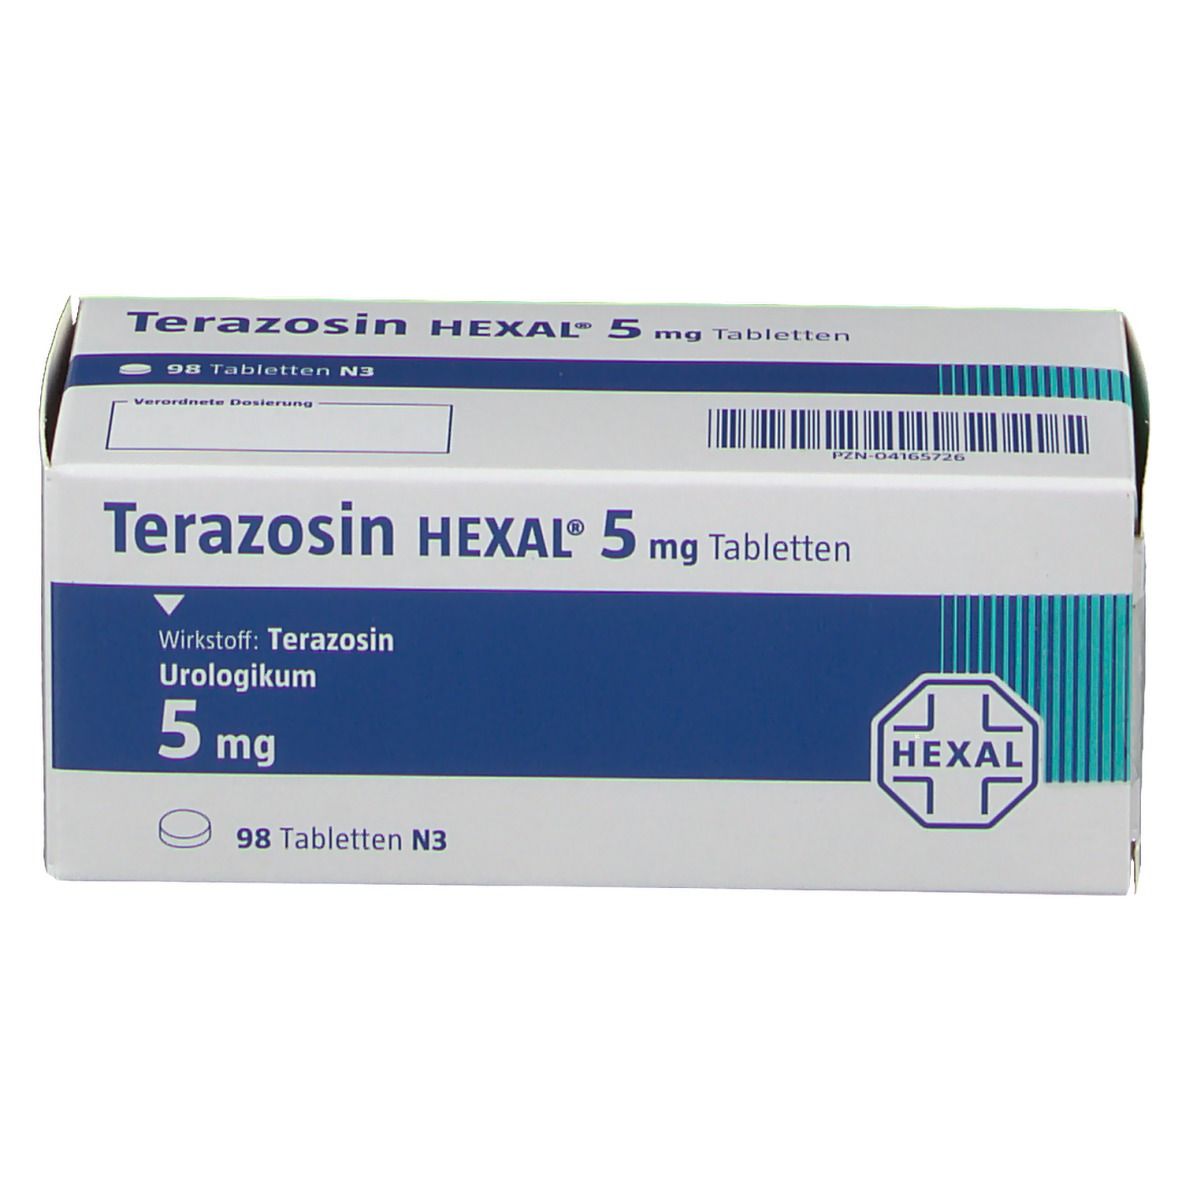 Terazosin HEXAL® 5 mg